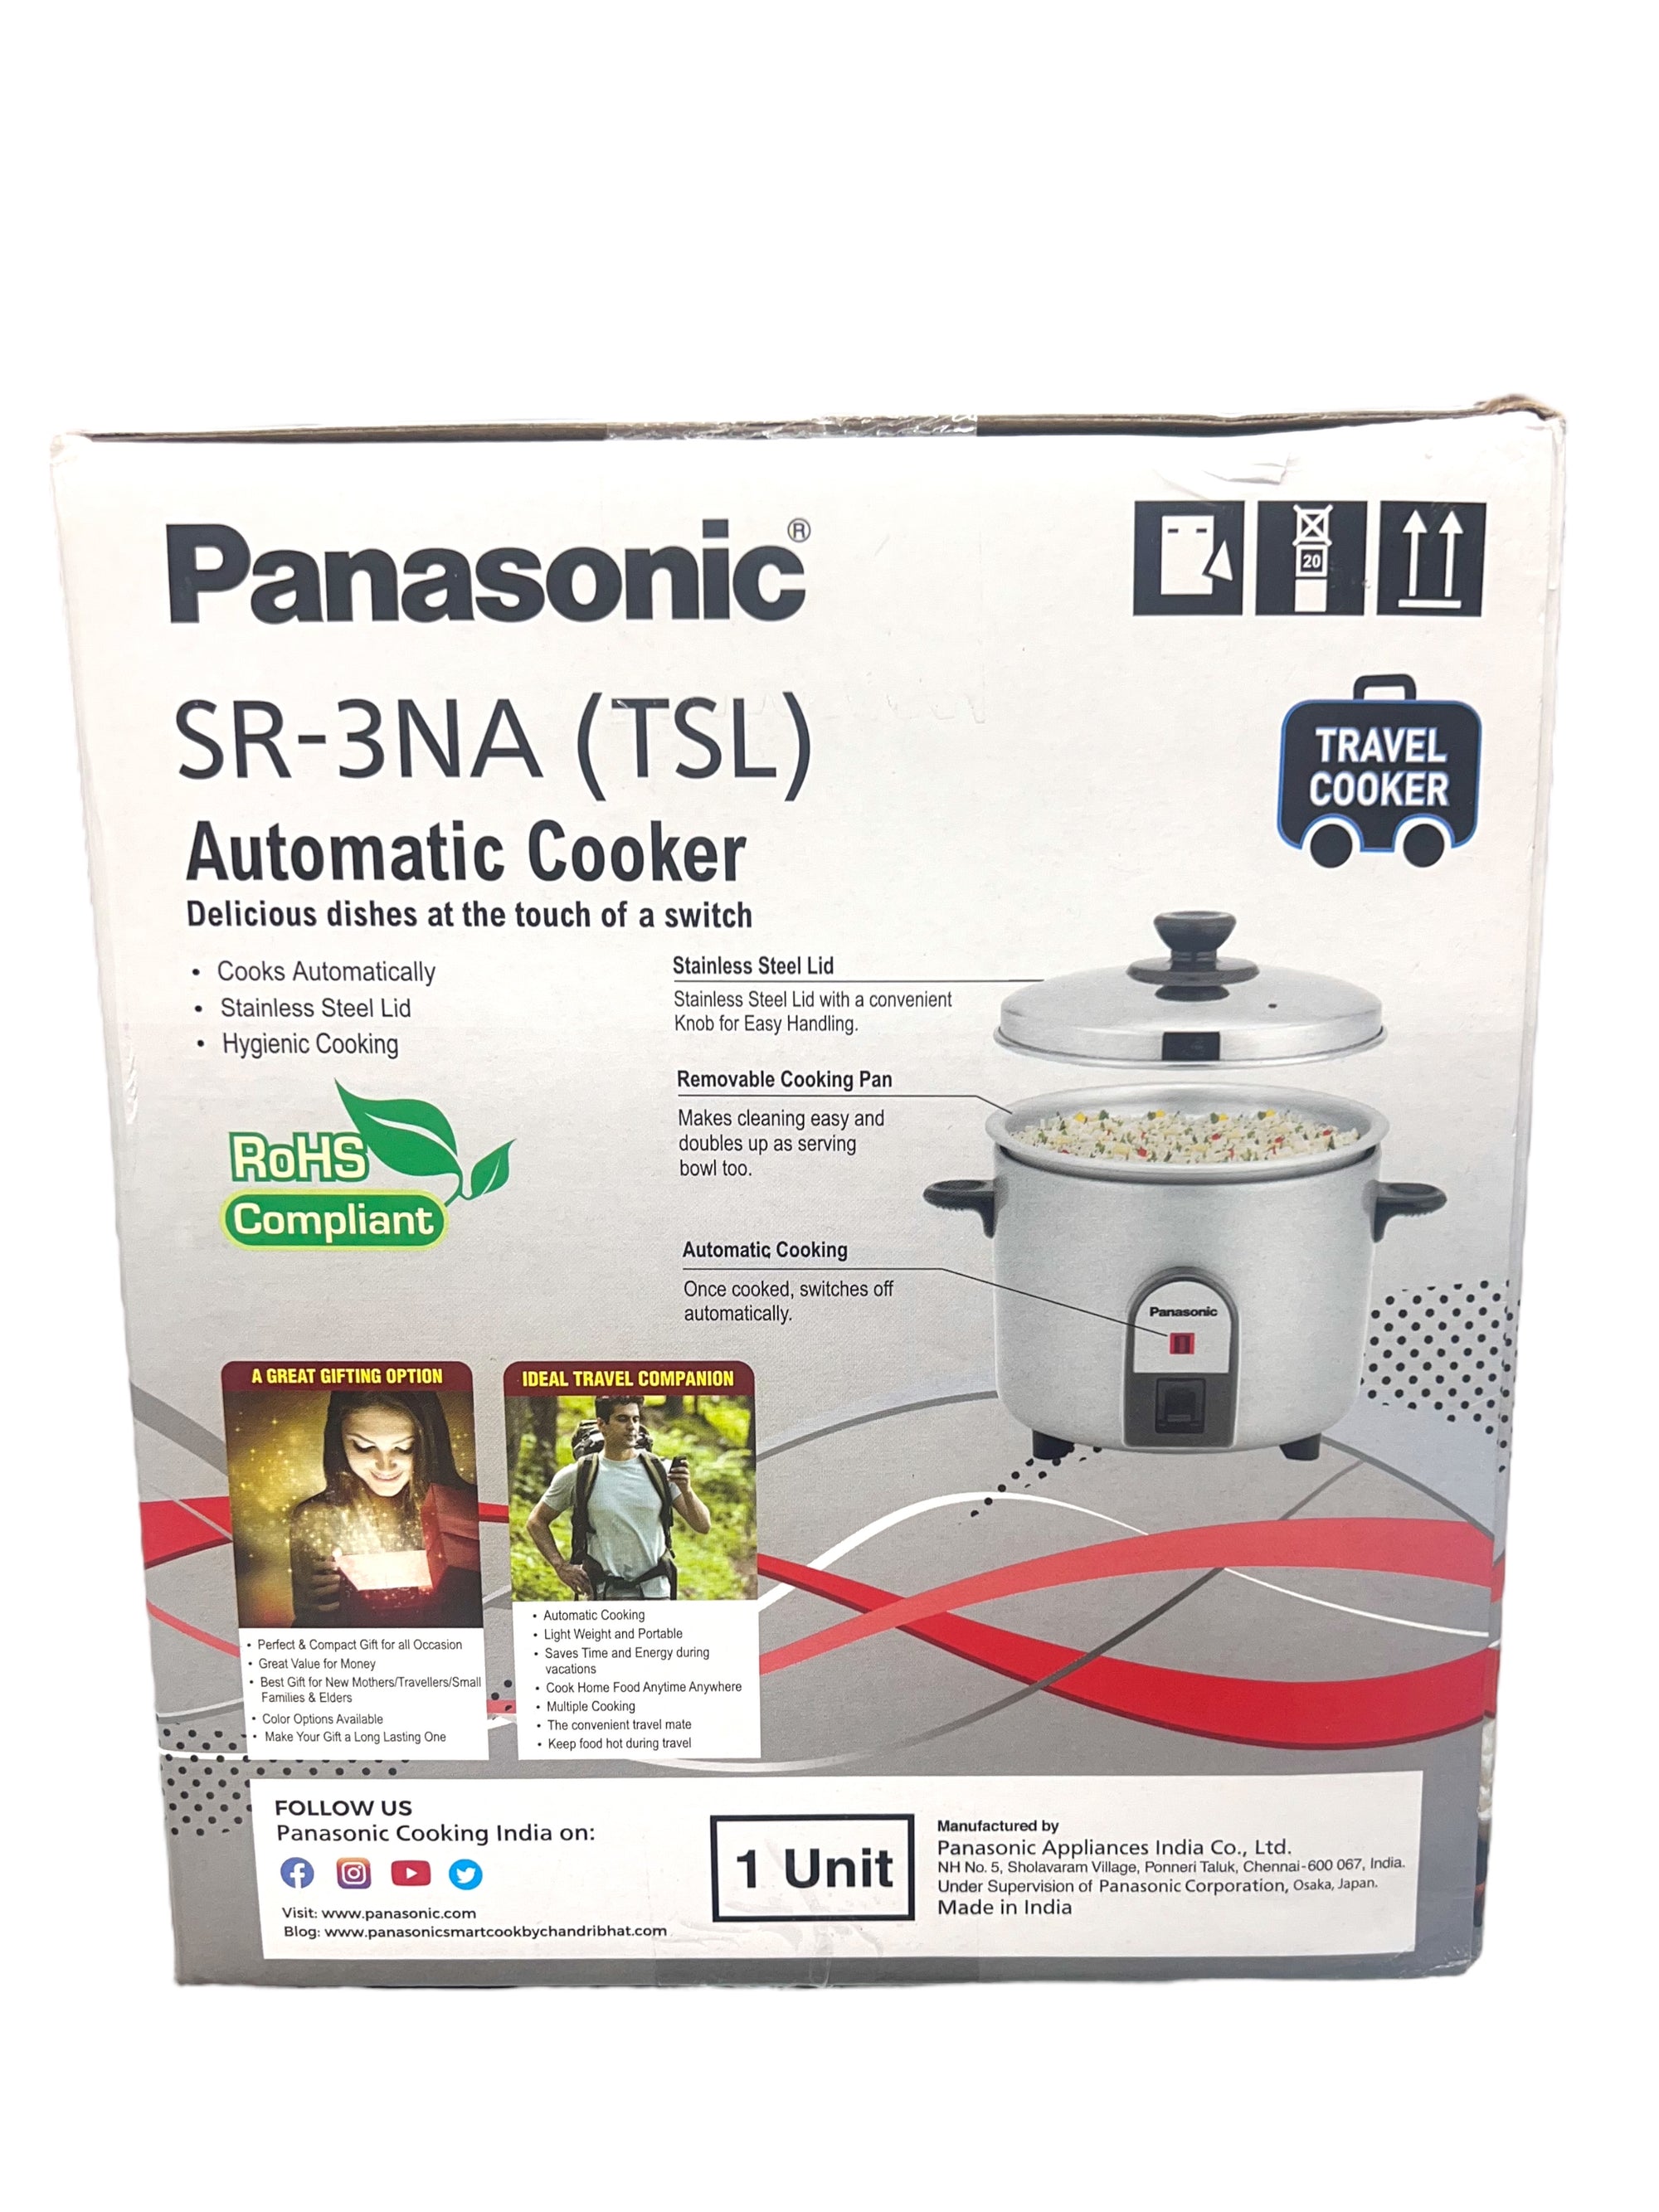 Panasonic's premium 5-cup rice cooker